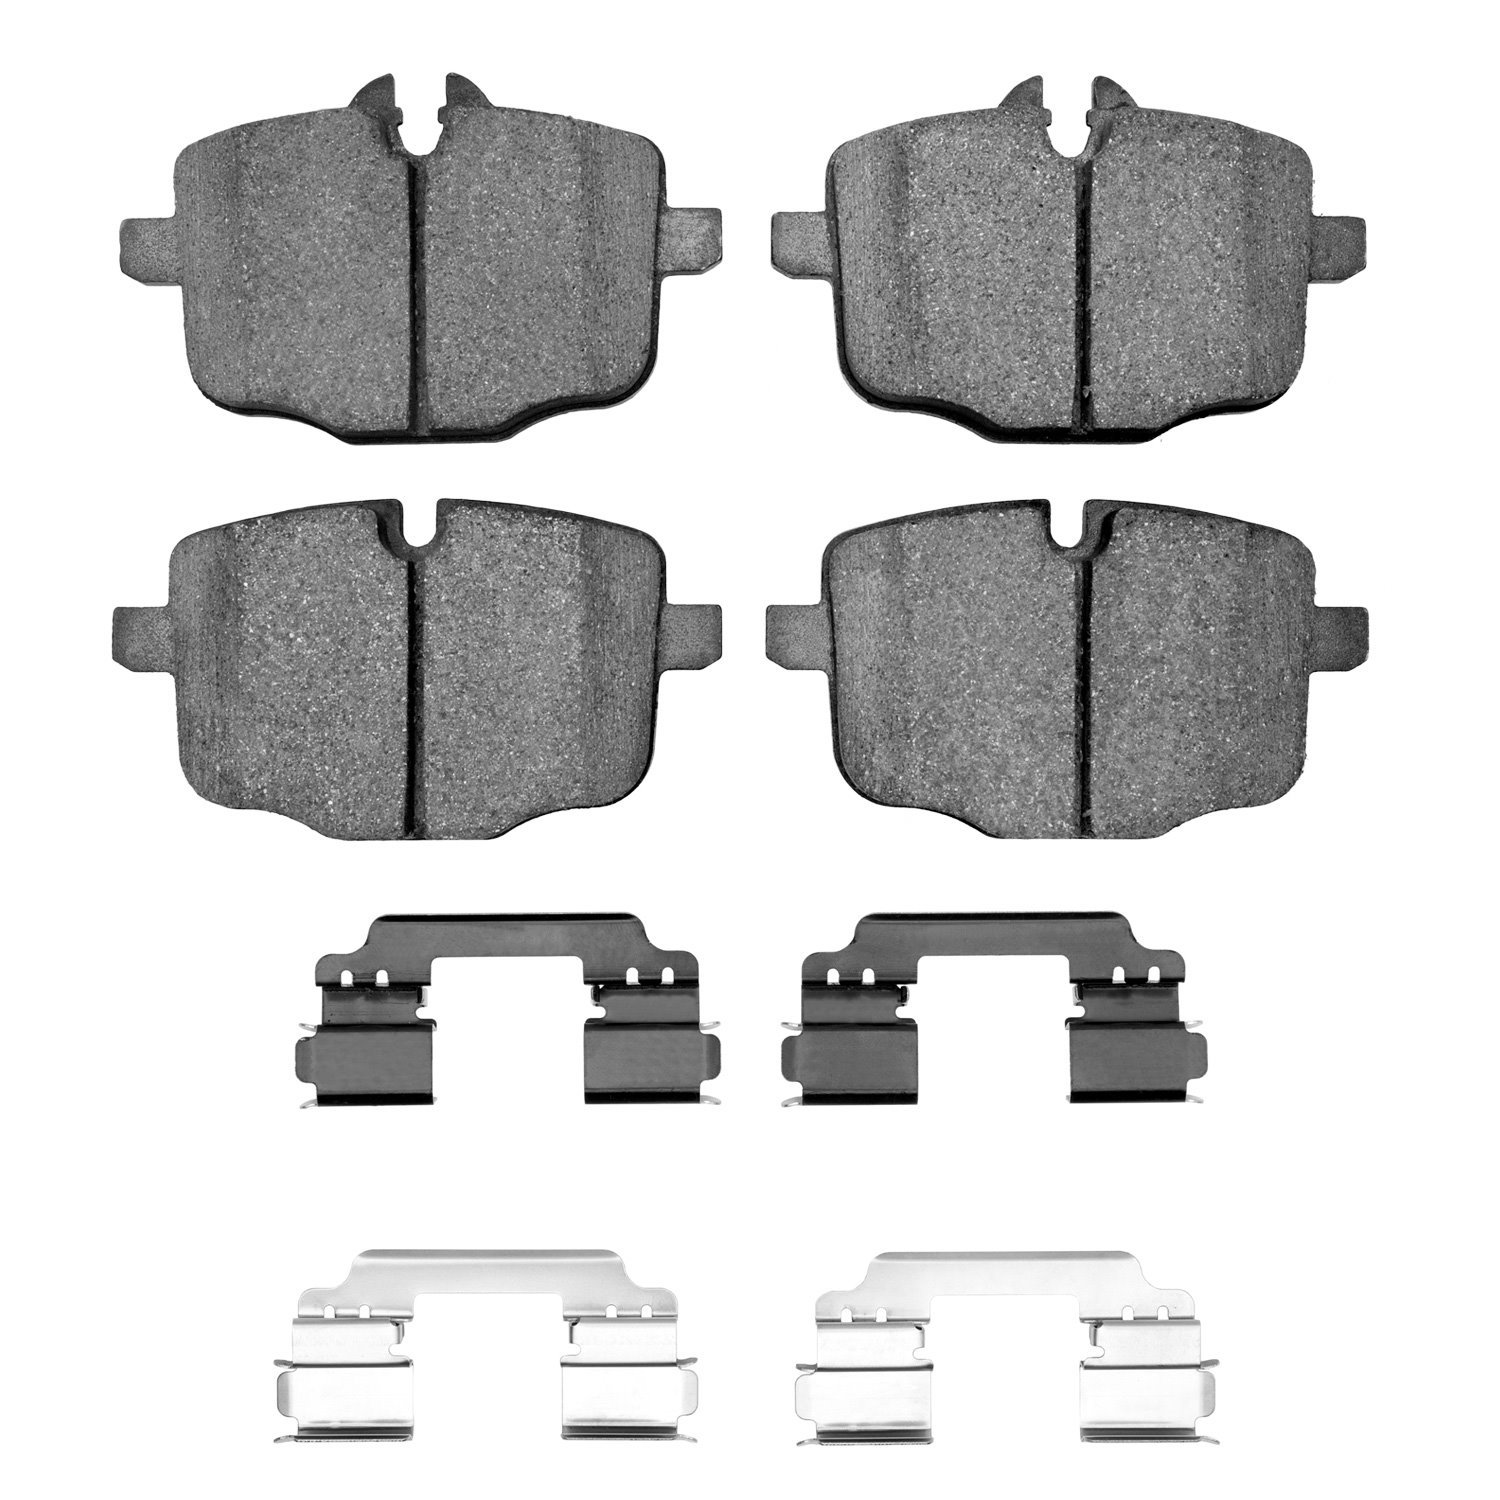 1552-1469-02 5000 Advanced Low-Metallic Brake Pads & Hardware Kit, 2012-2019 BMW, Position: Rear